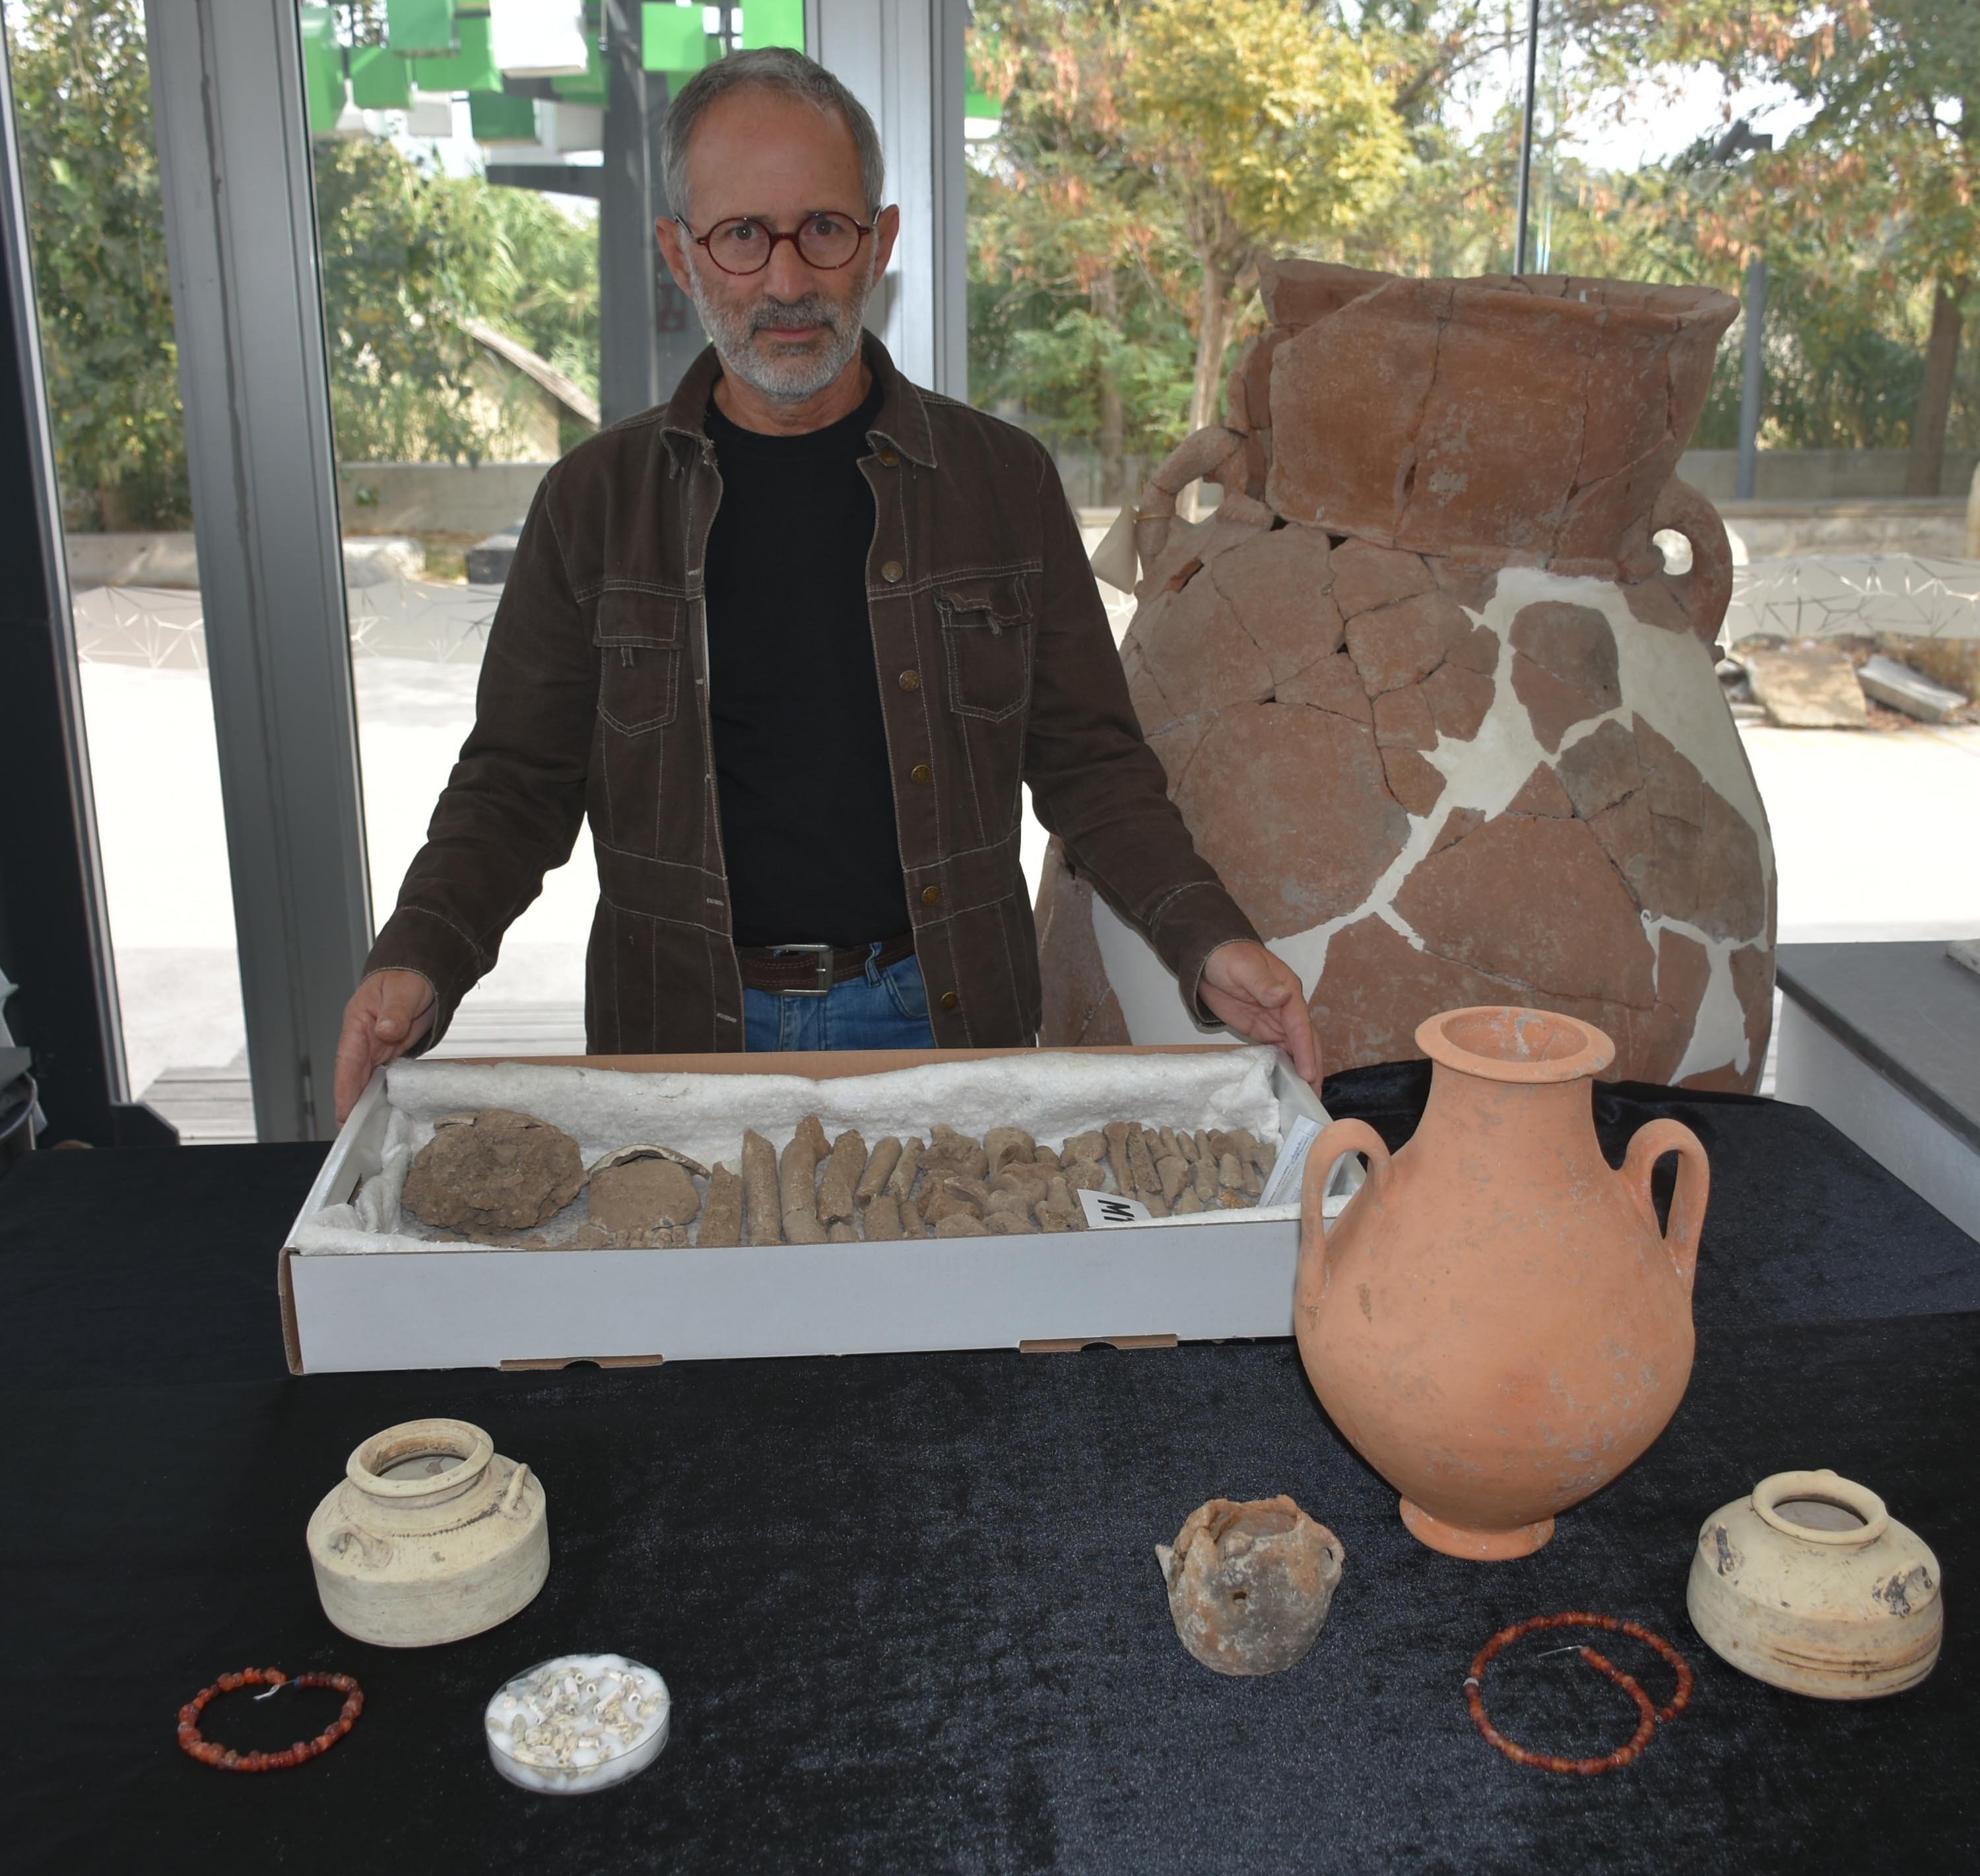 Direktur penggalian Zafer Derin menampilkan artefak dan tulang yang digali selama penggalian di Yeşilova tumulus, Izmir, Türkiye, 30 Oktober 2022. (Foto DHA)